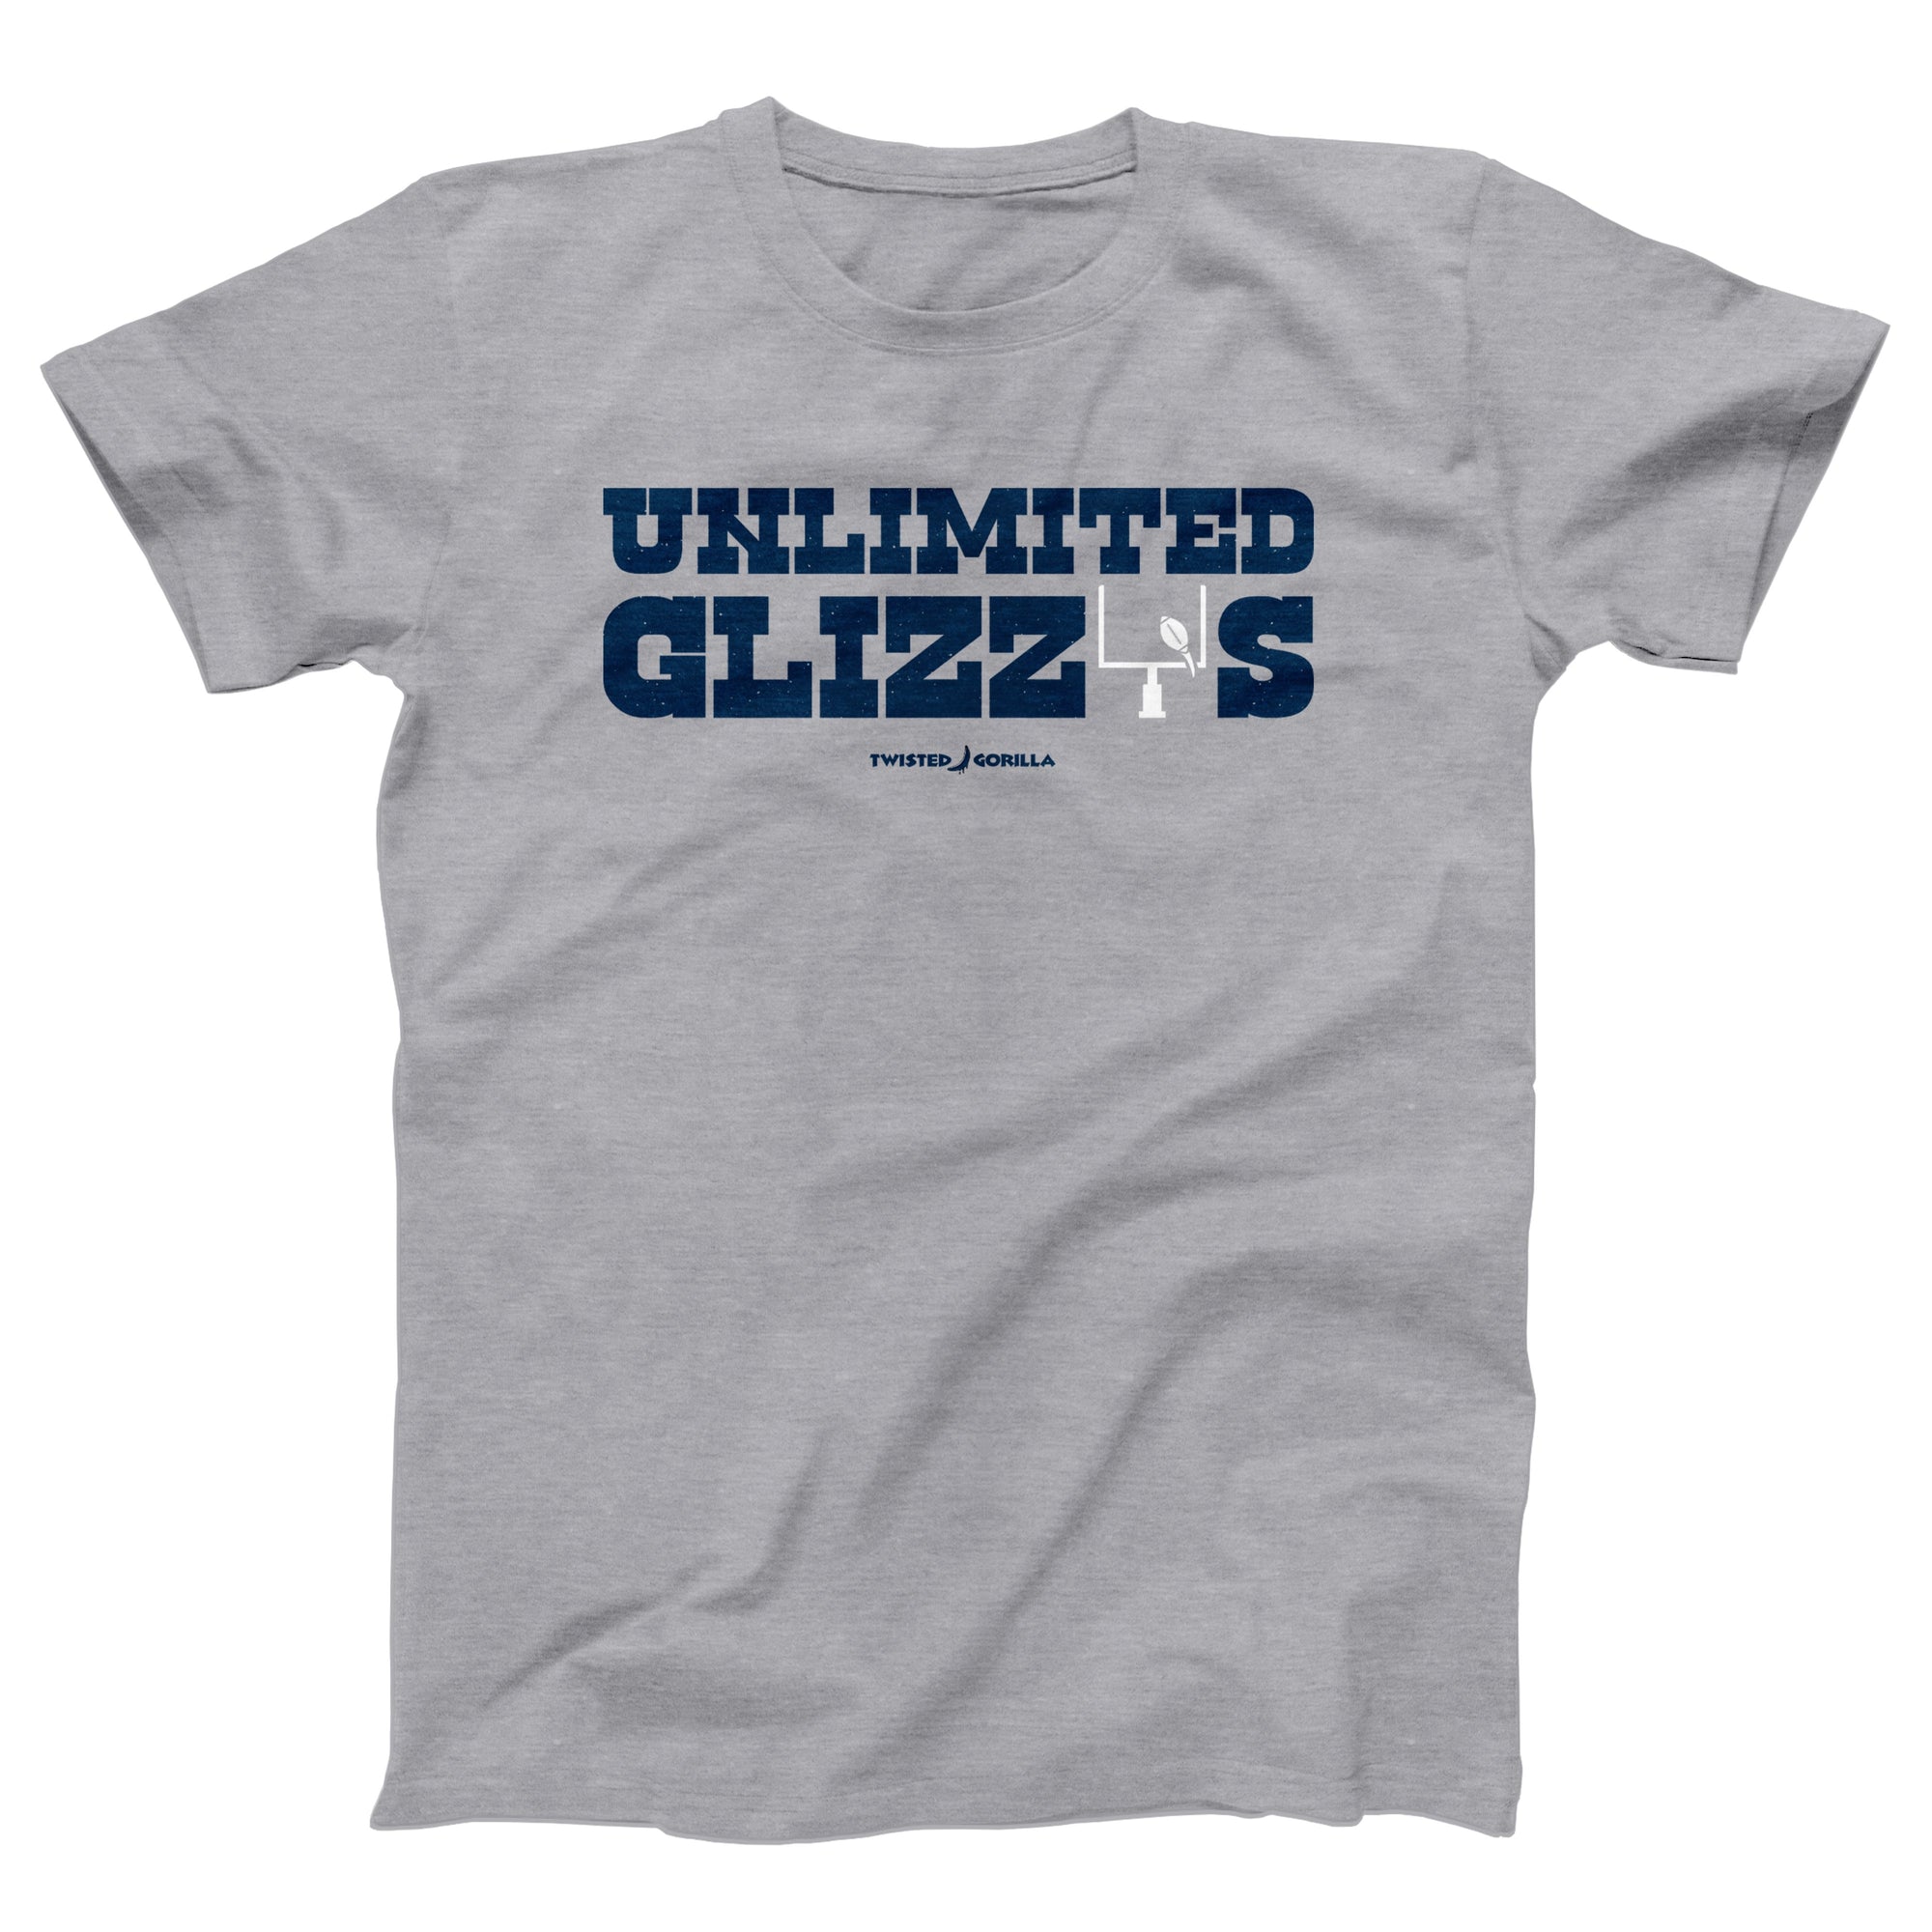 Unlimited Glizzys Adult Unisex T-Shirt - Twisted Gorilla